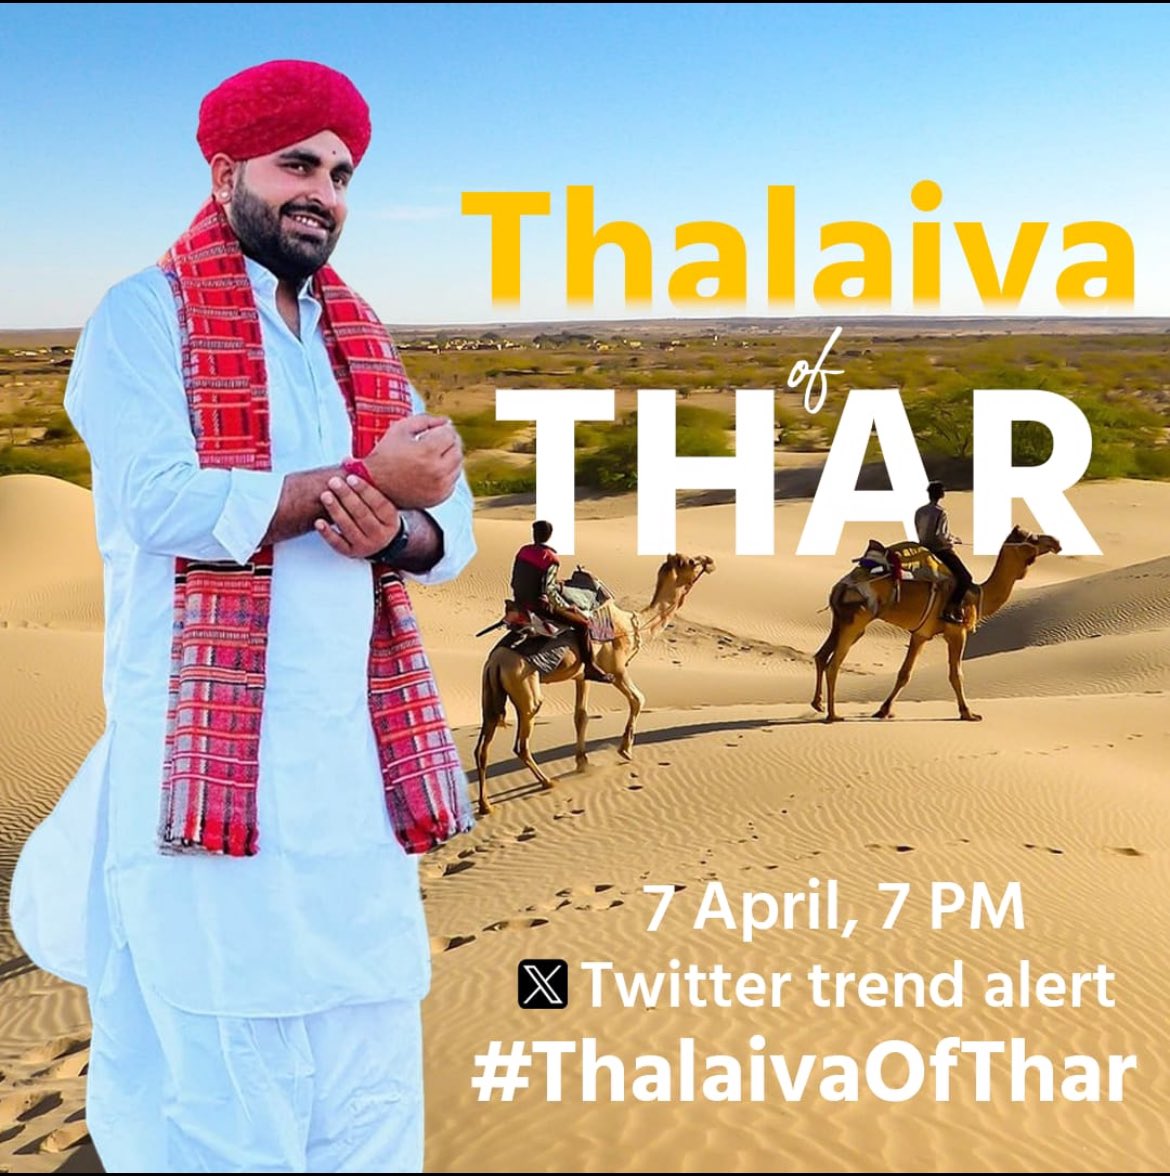 #ThalaivaOfThar
Twitter trand alert 
@RavindraBhati__